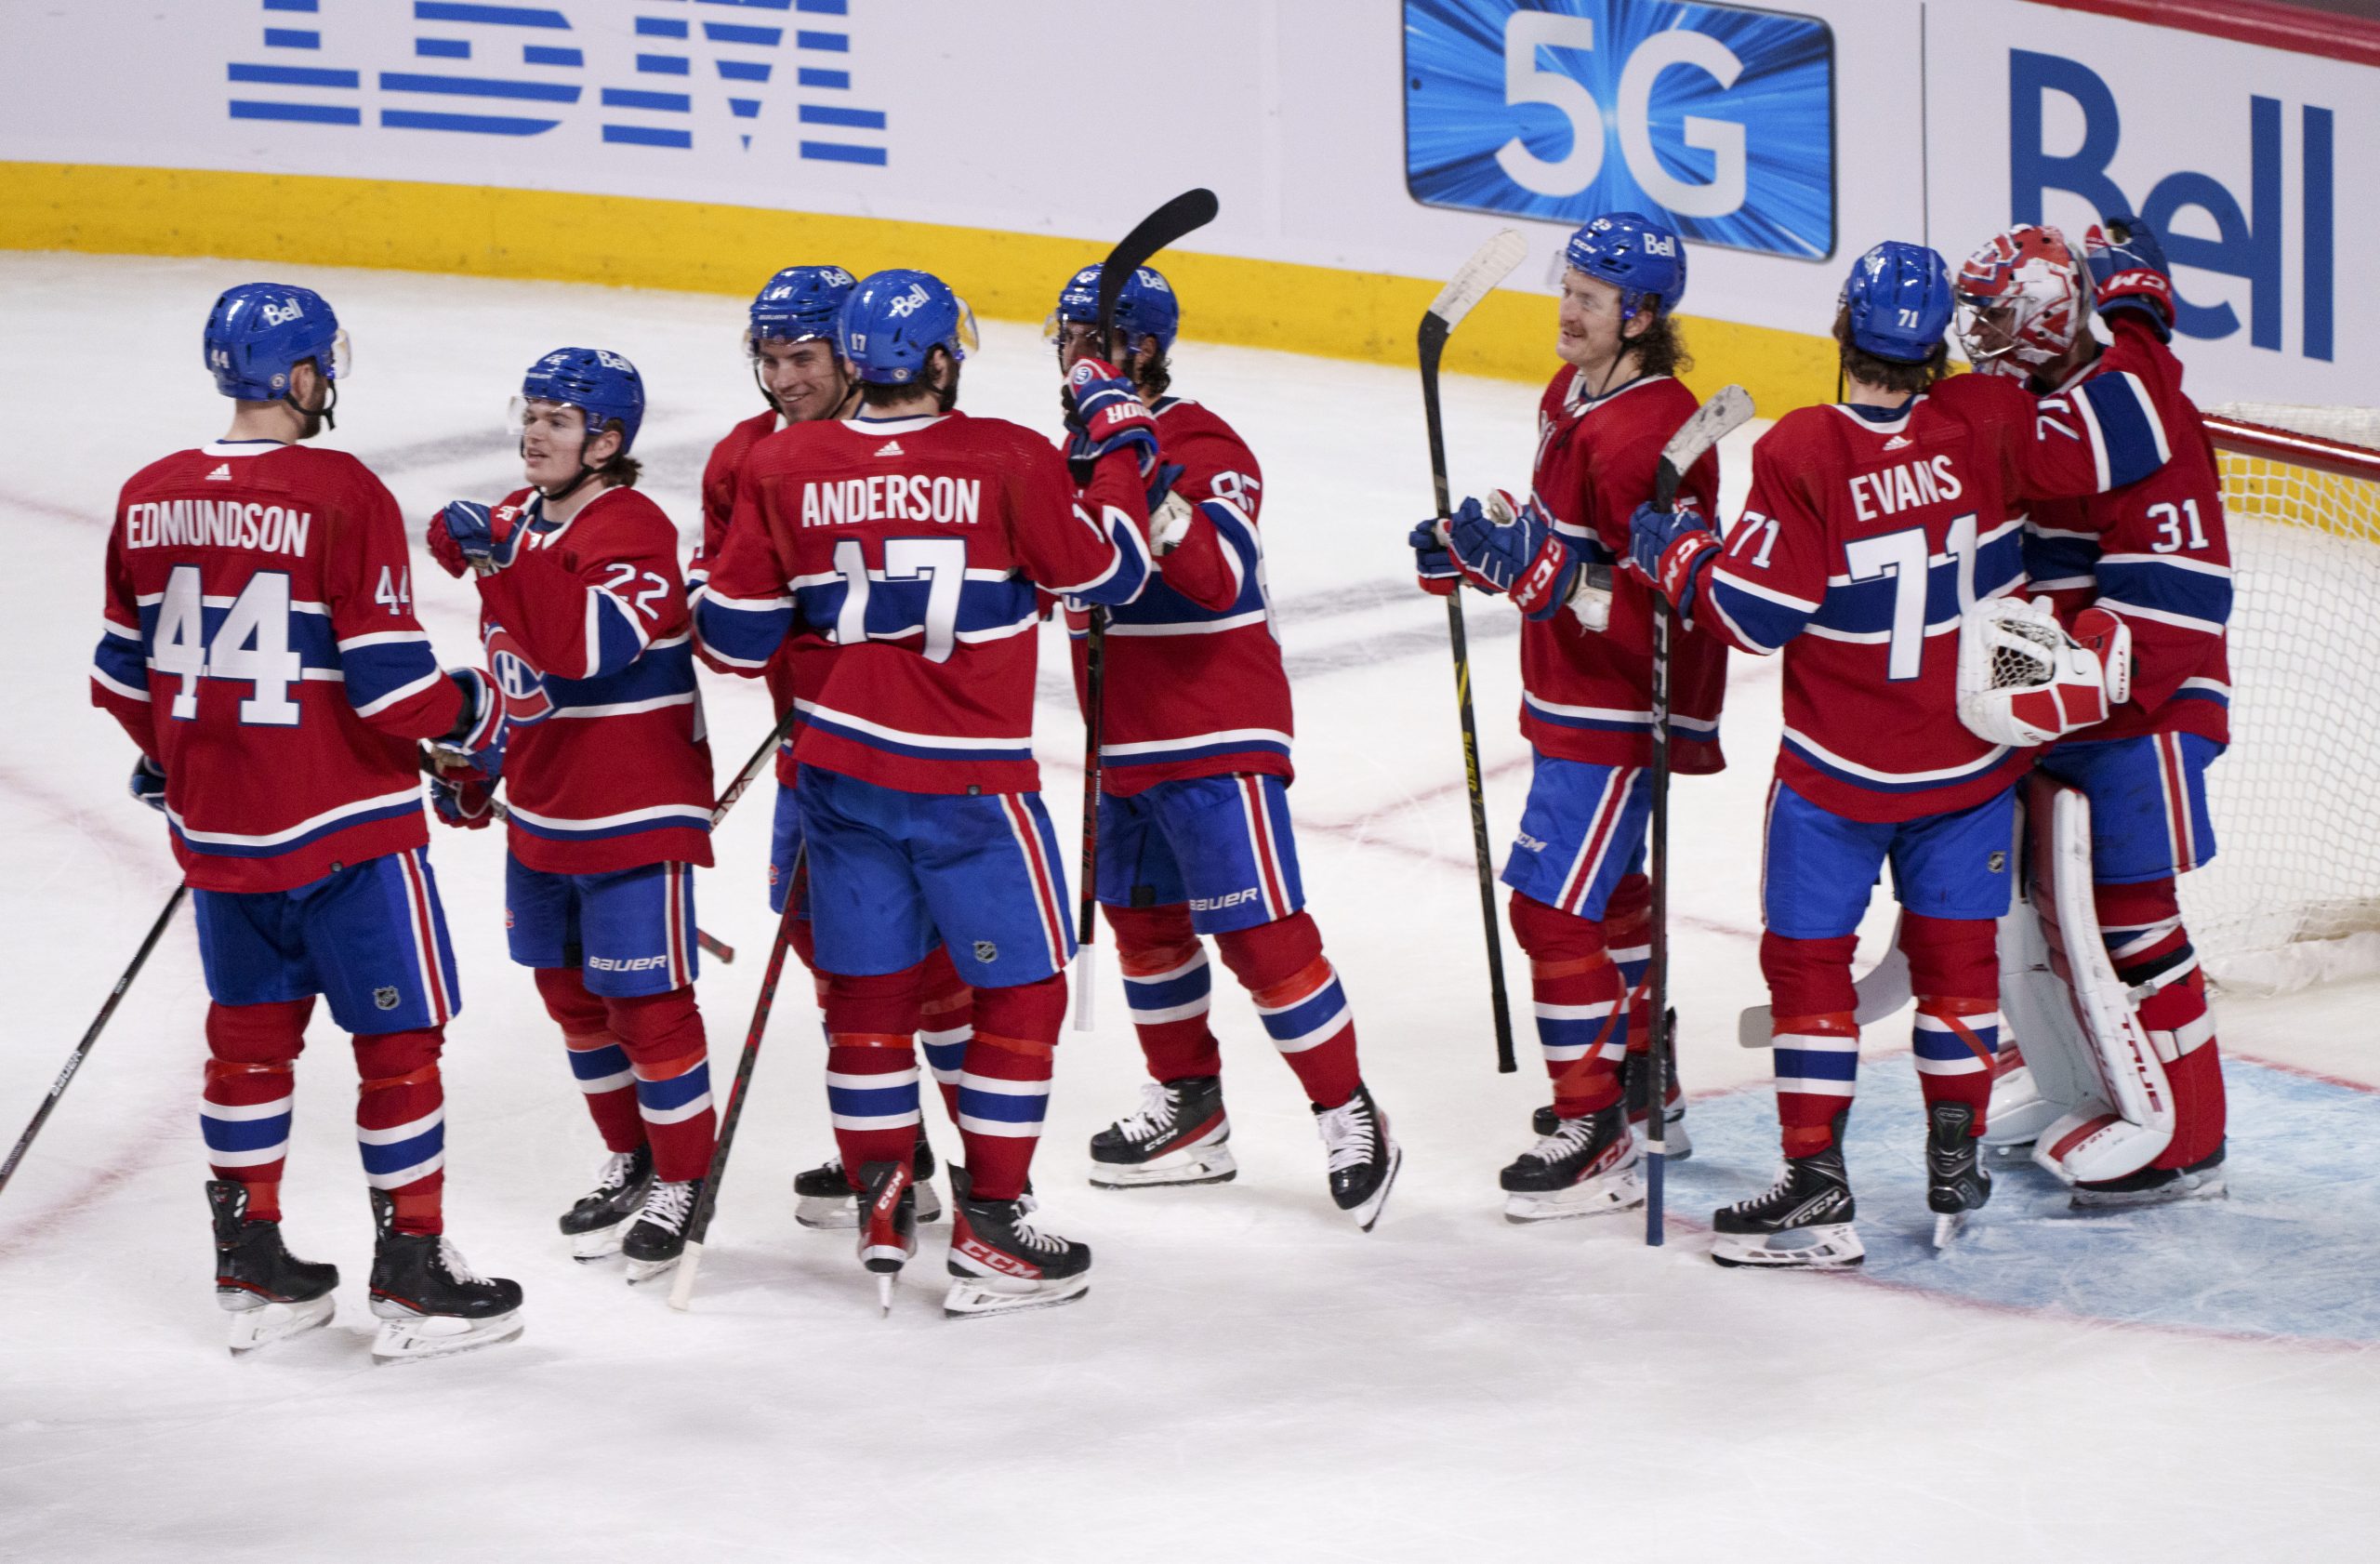 Montreal Canadiens Jerseys, Canadiens Jersey Deals, Canadiens